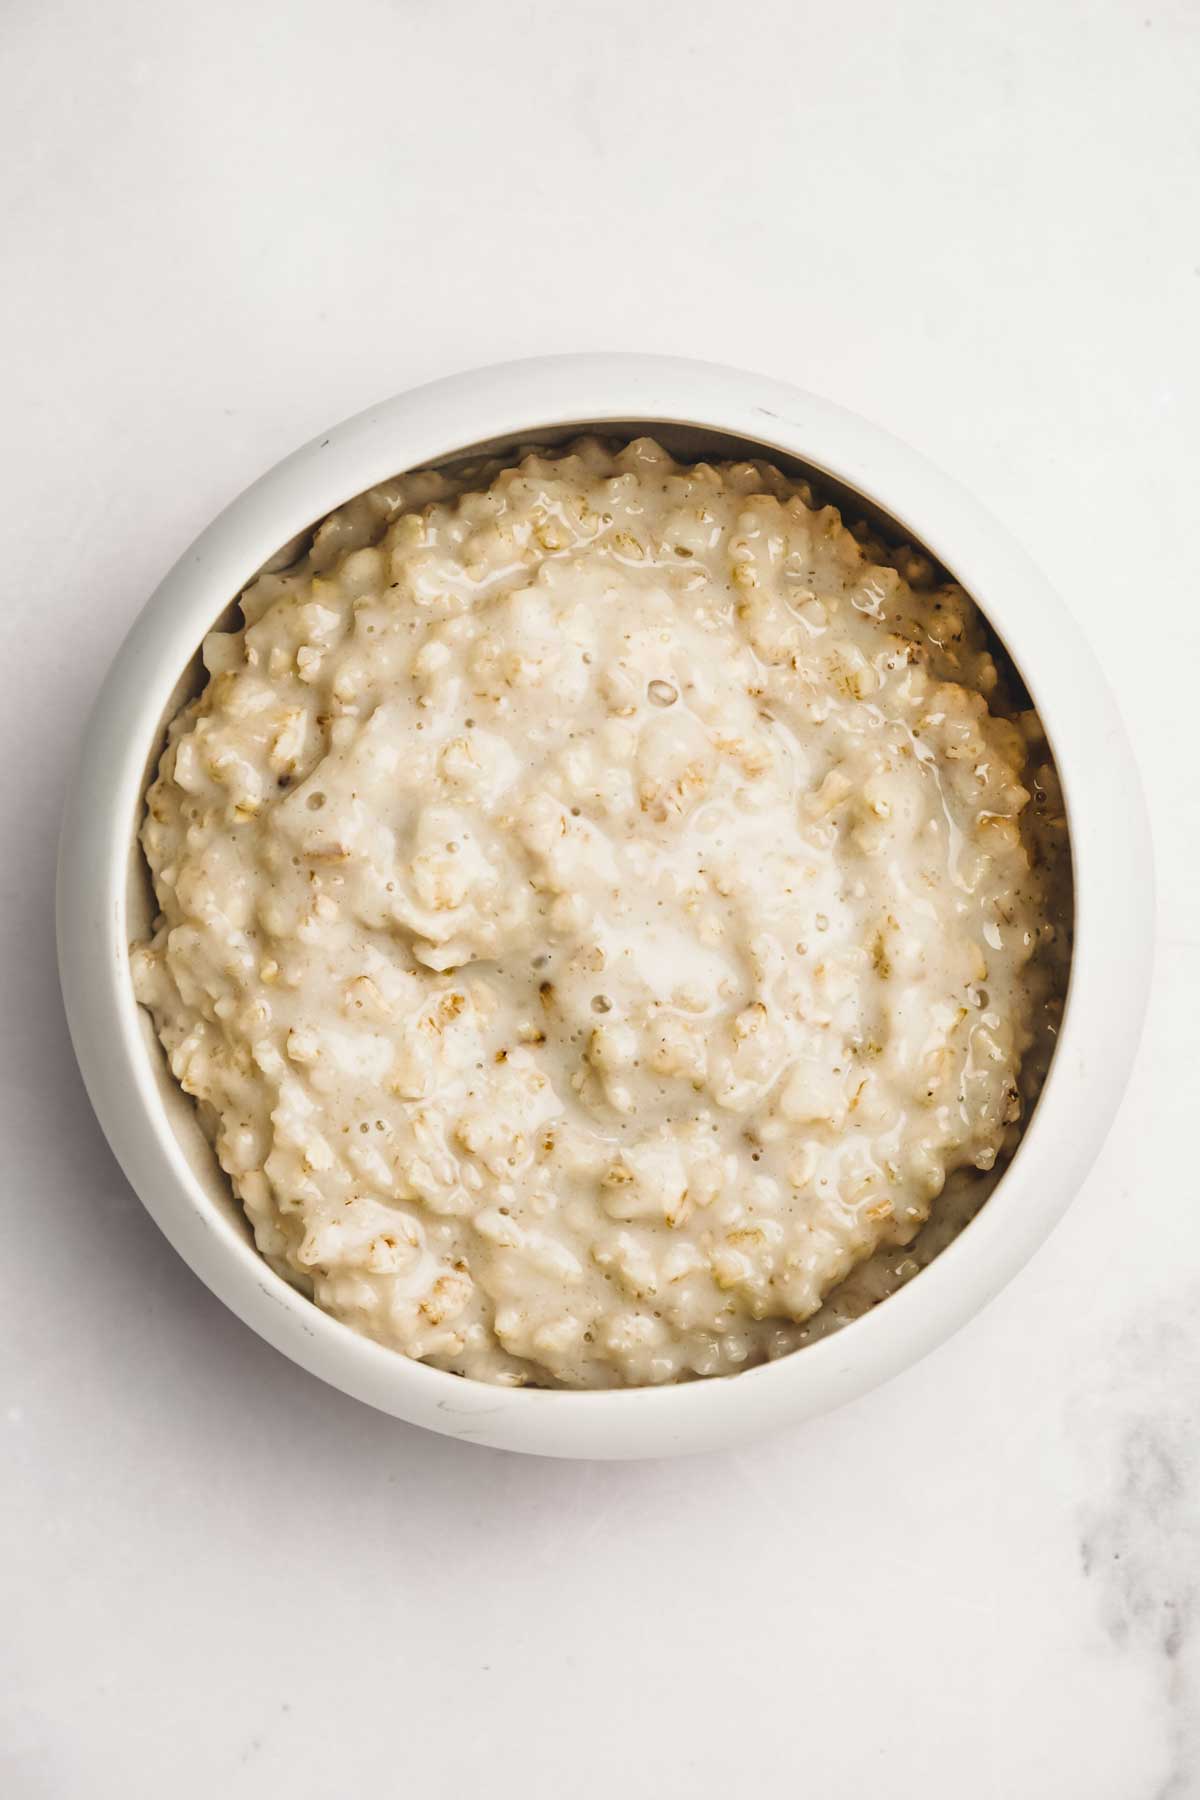 Bowl with oatmeal porridge